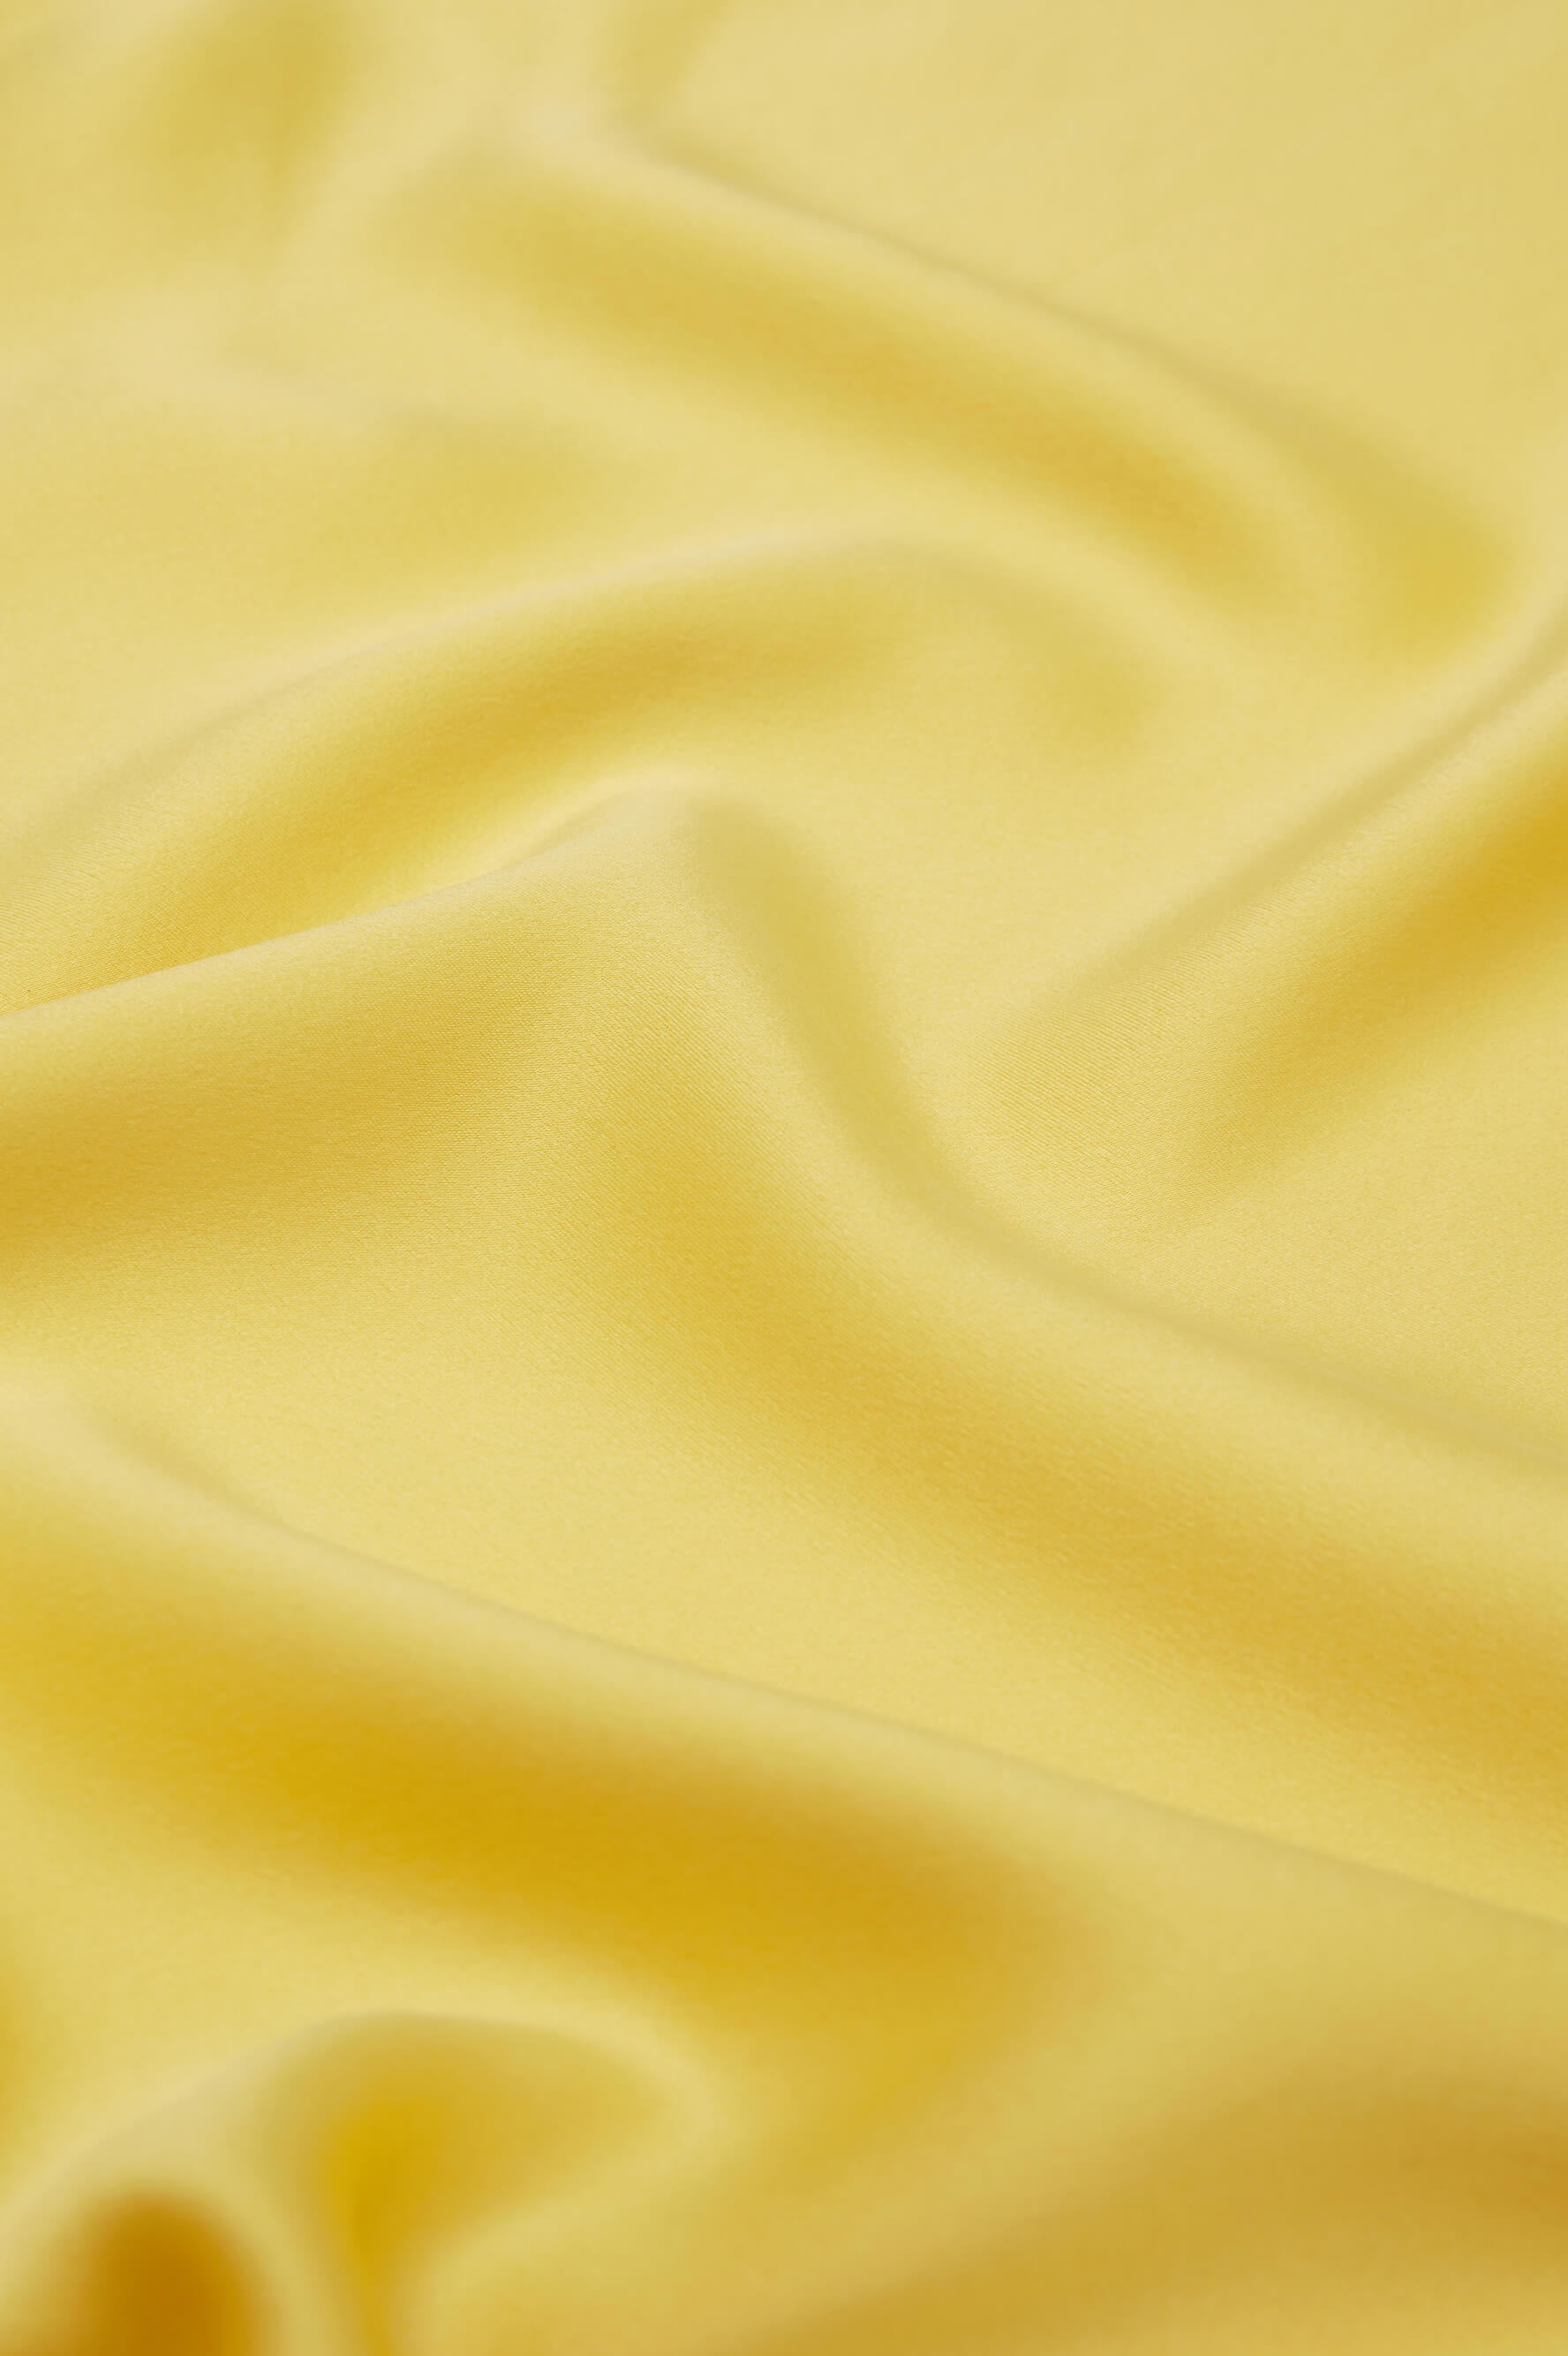 Amina Yellow Fringed Robe in Sandwashed Silk